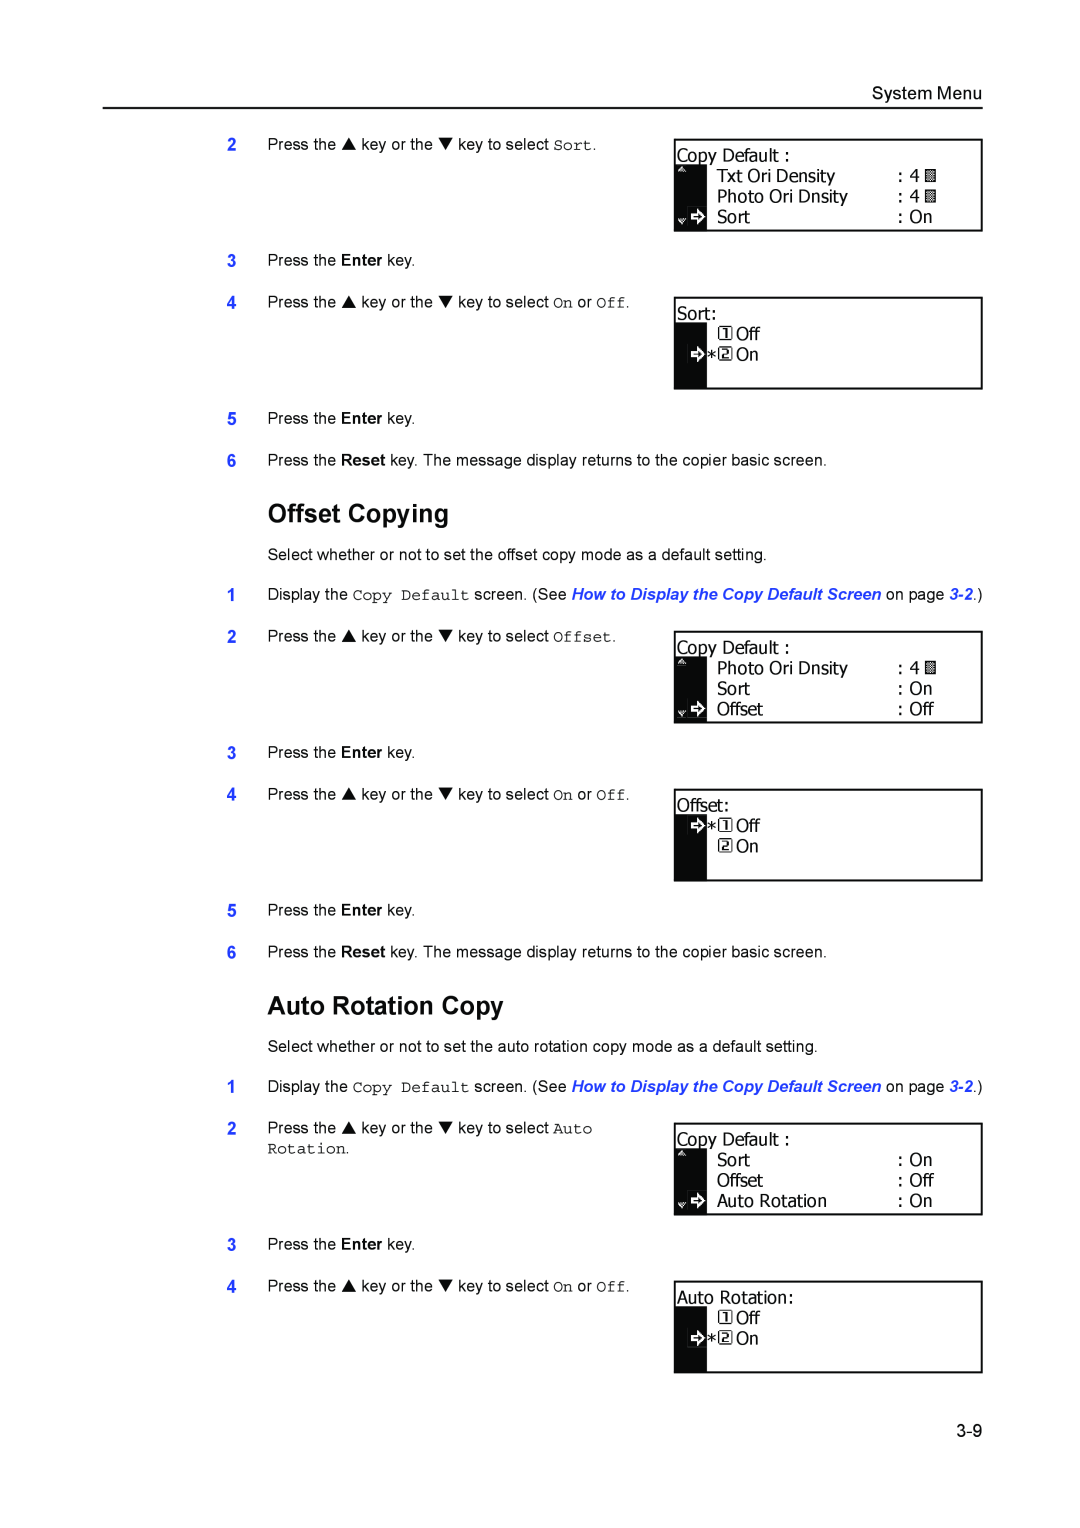 Kyocera 2050, 1650, 2550 manual Offset Copying, Auto Rotation Copy, System Menu 